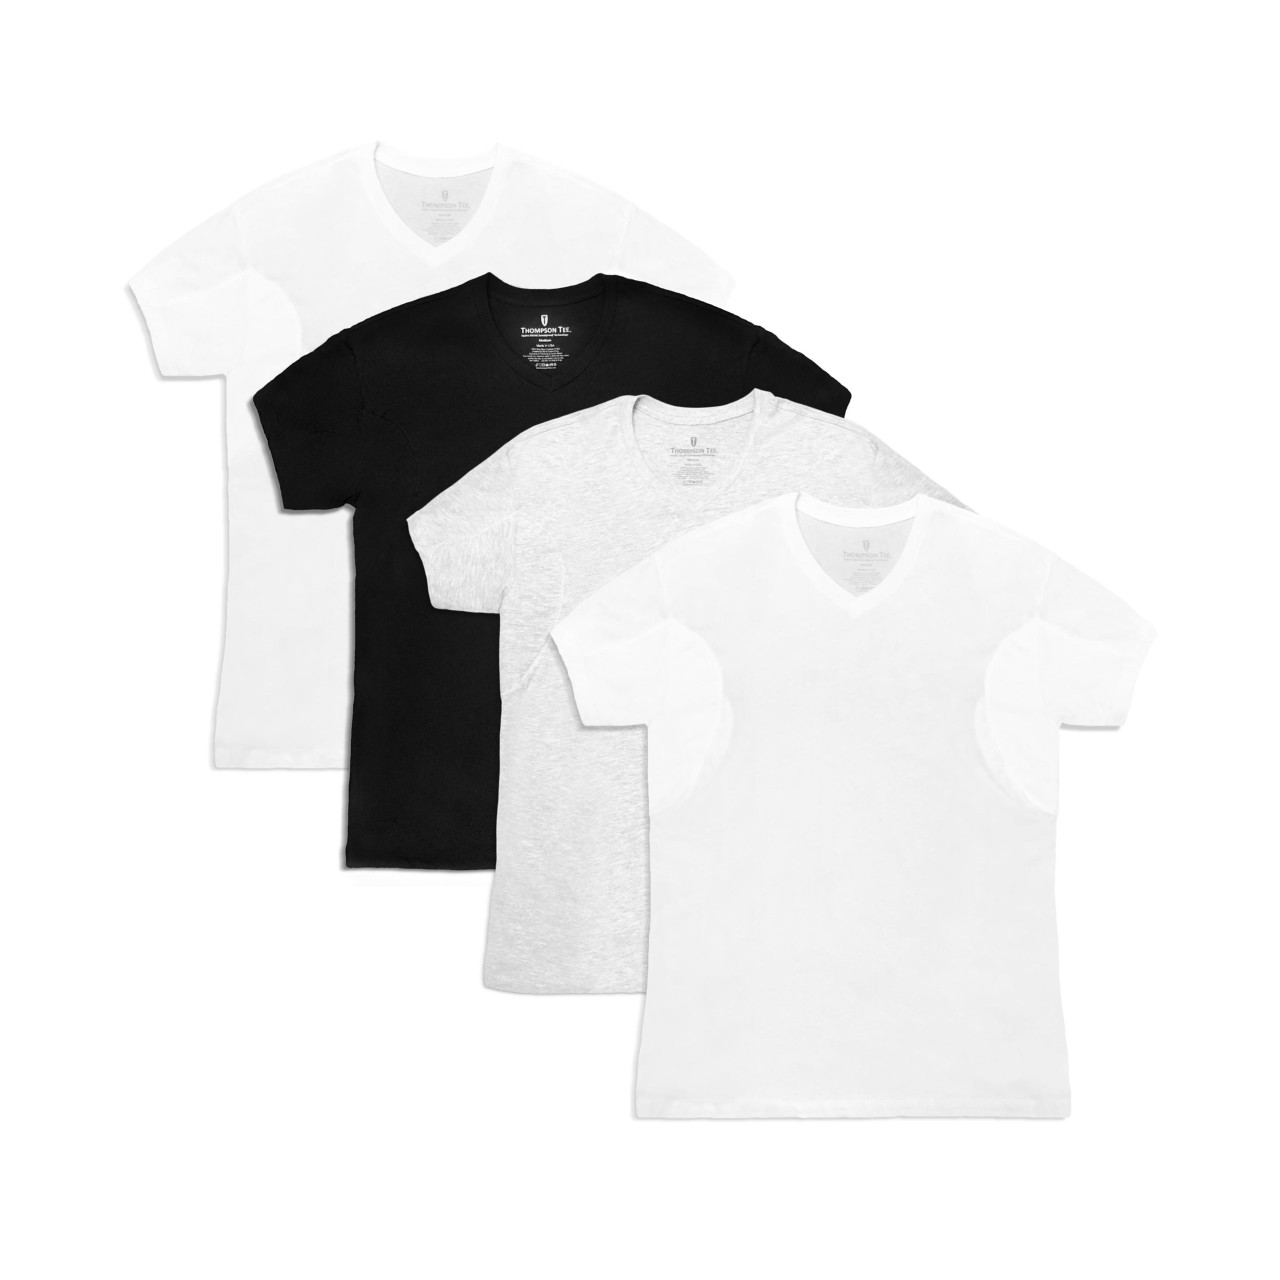 Boys' Super Soft Solid Multi-Color Short Sleeve Crew T-Shirt